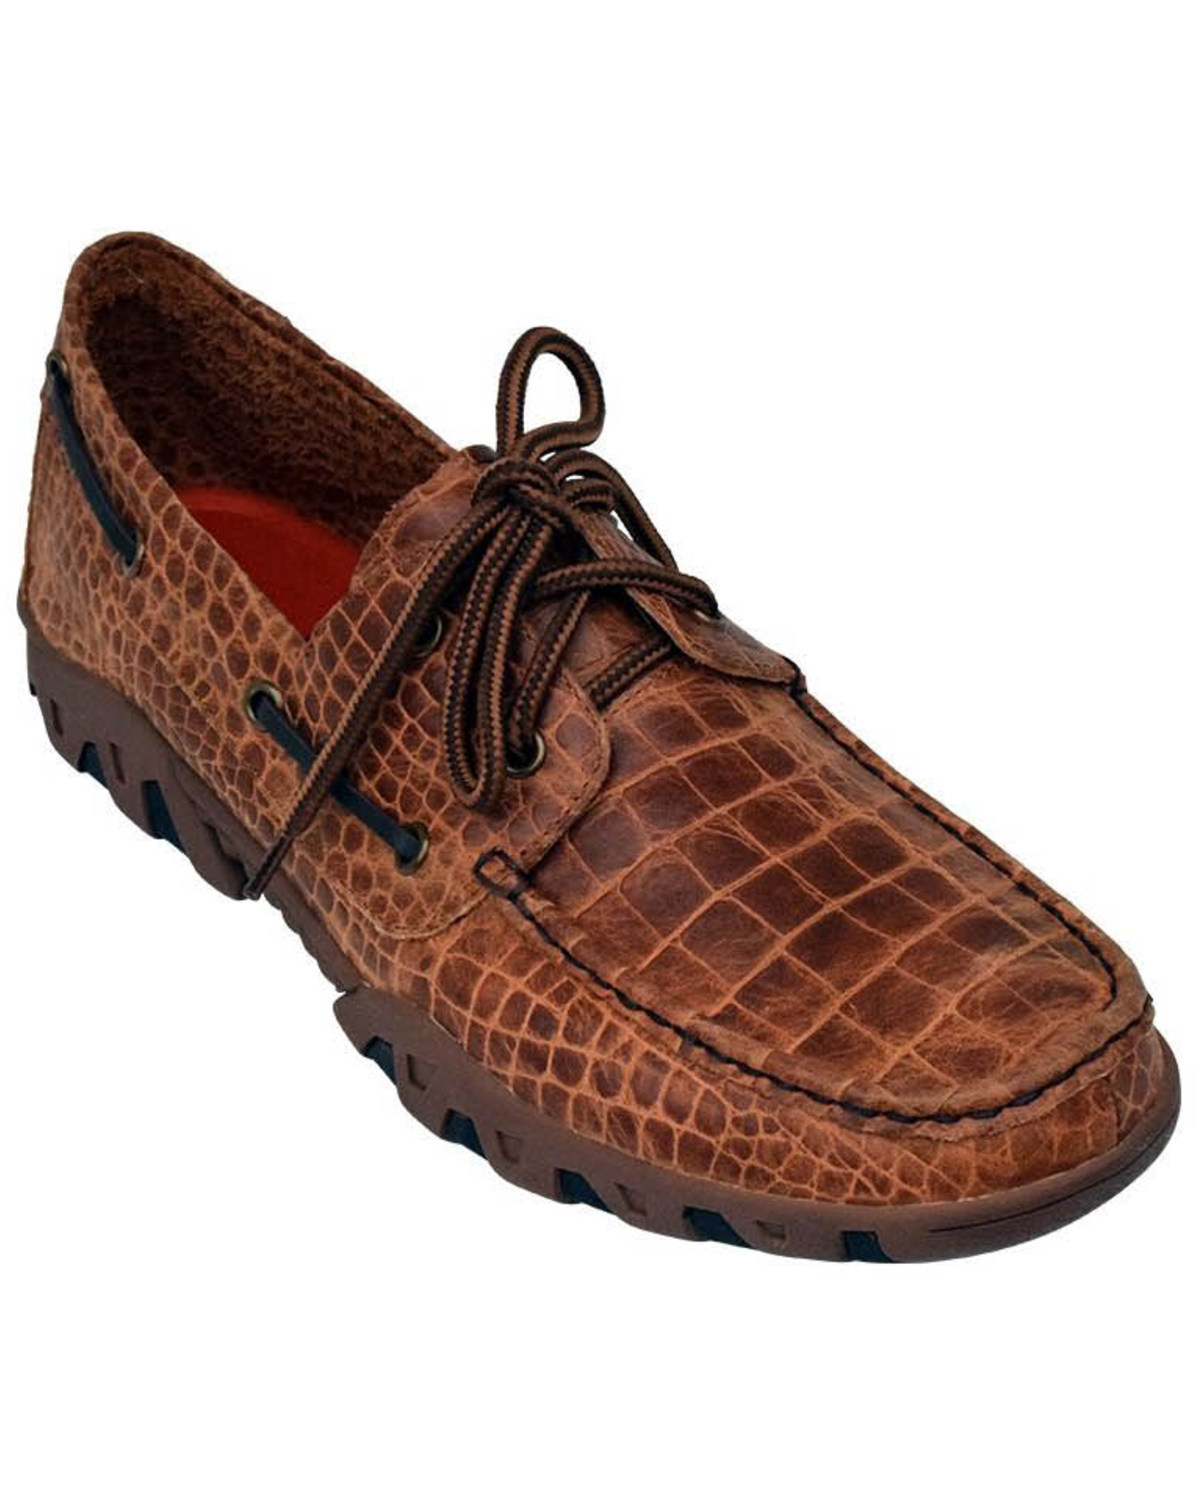 croc print shoes